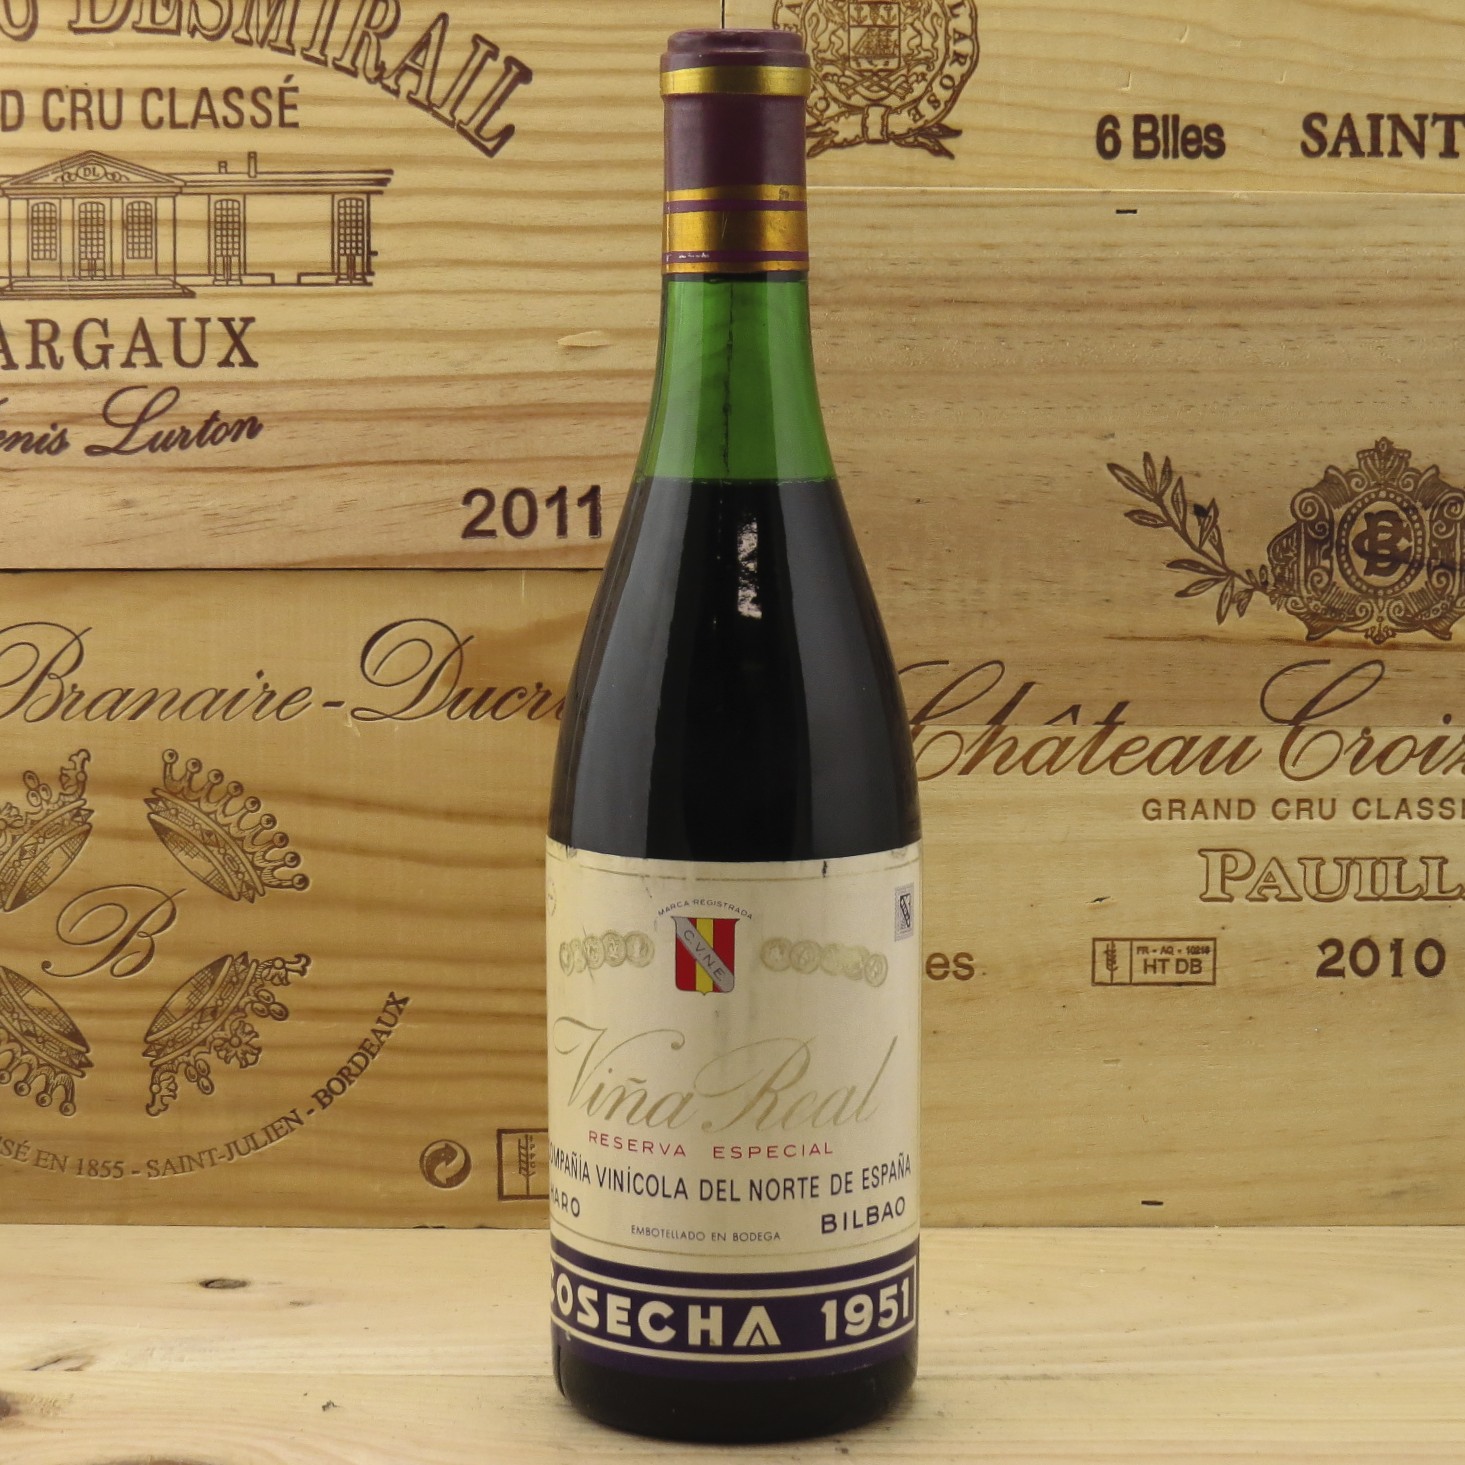 1951 Rioja Vina Real Reserva Especial